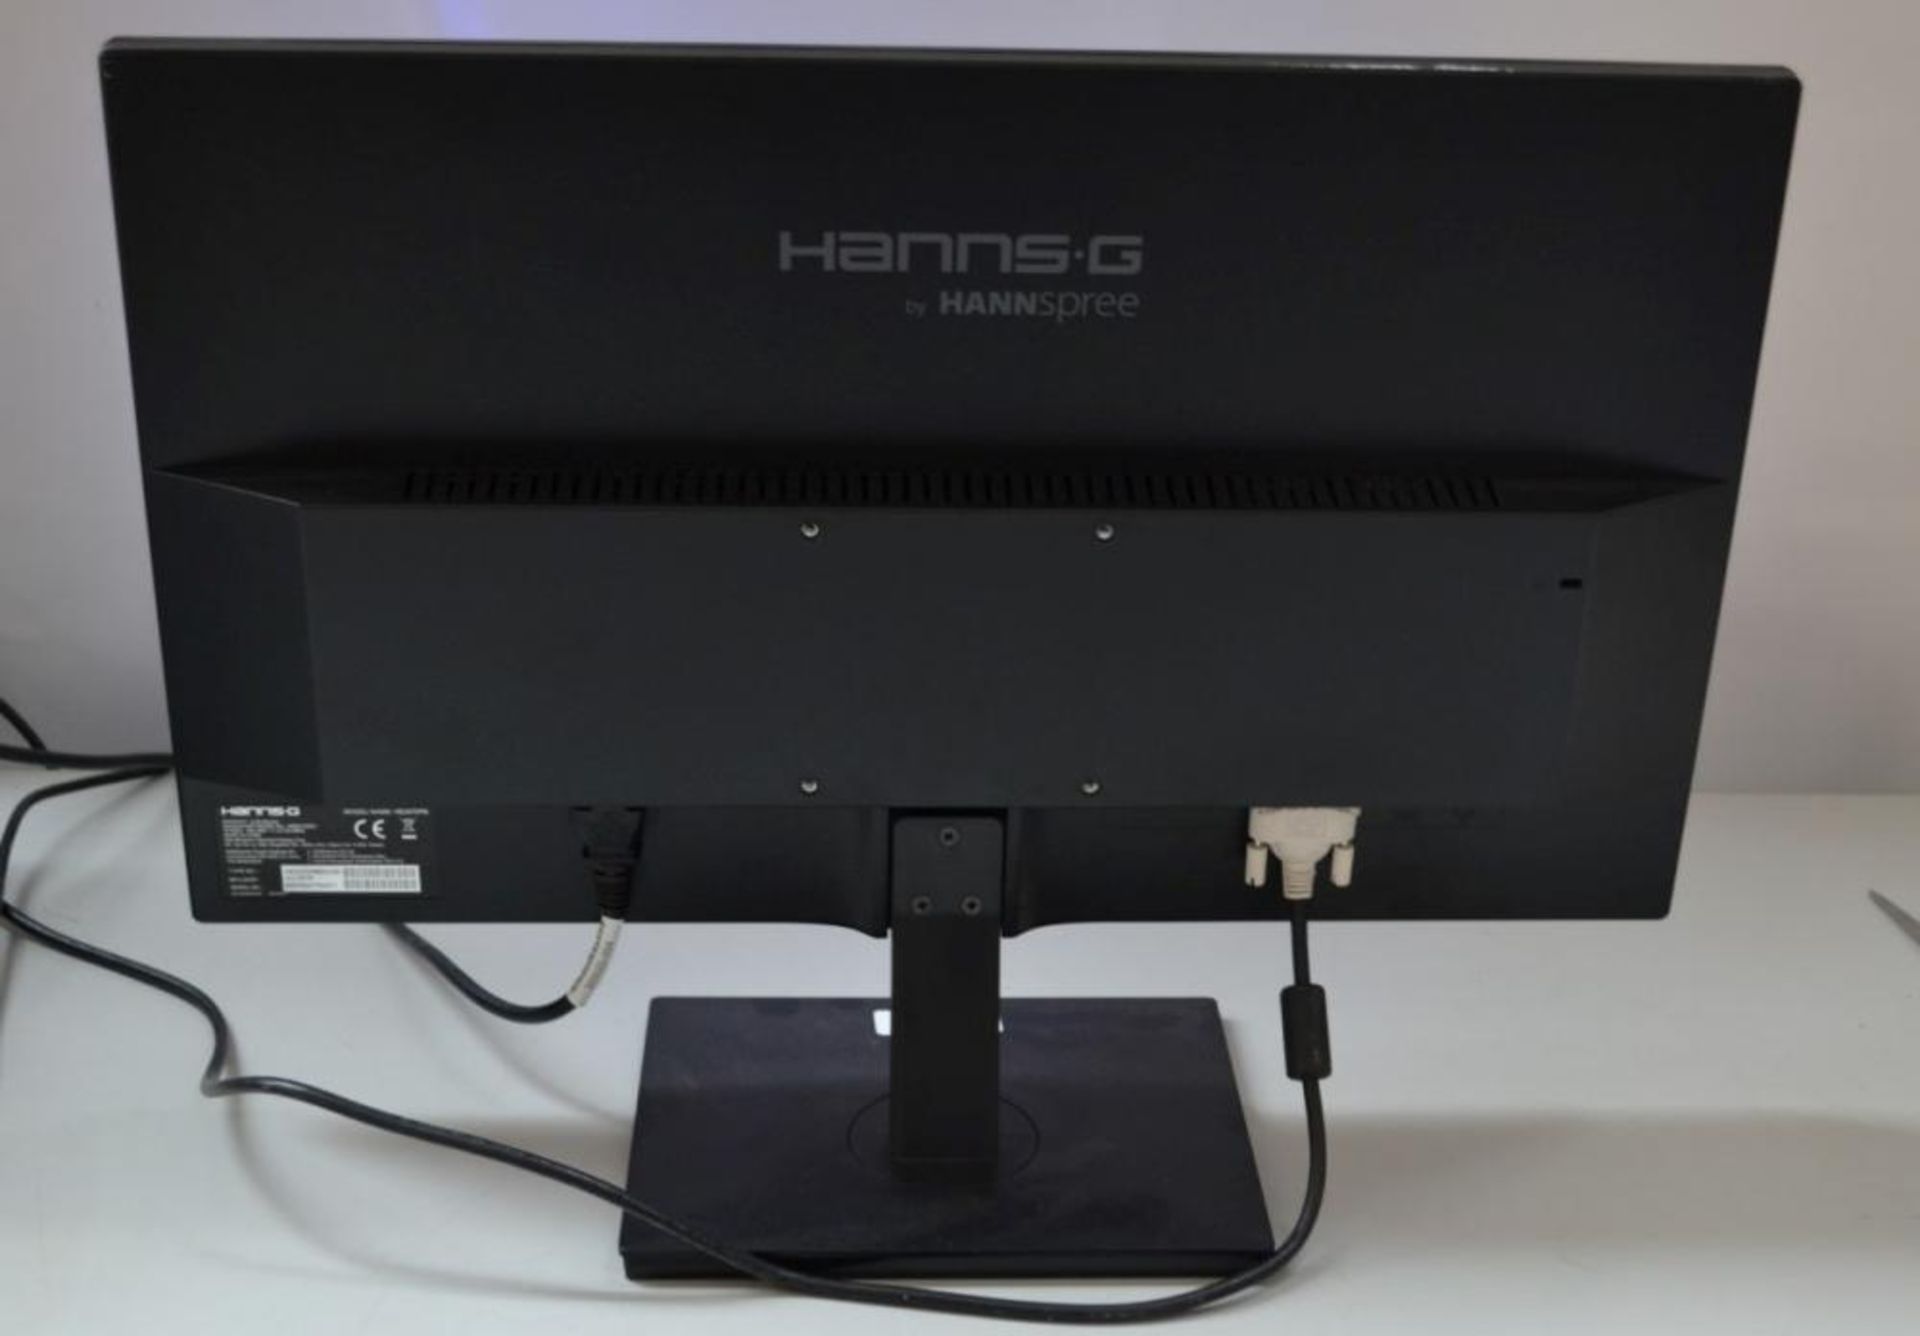 2 x HannsG HE247DPB 24" LED Full HD PC Monitors - Ref J2246 - CL394 - Location: Altrincham WA14 - H - Image 3 of 3